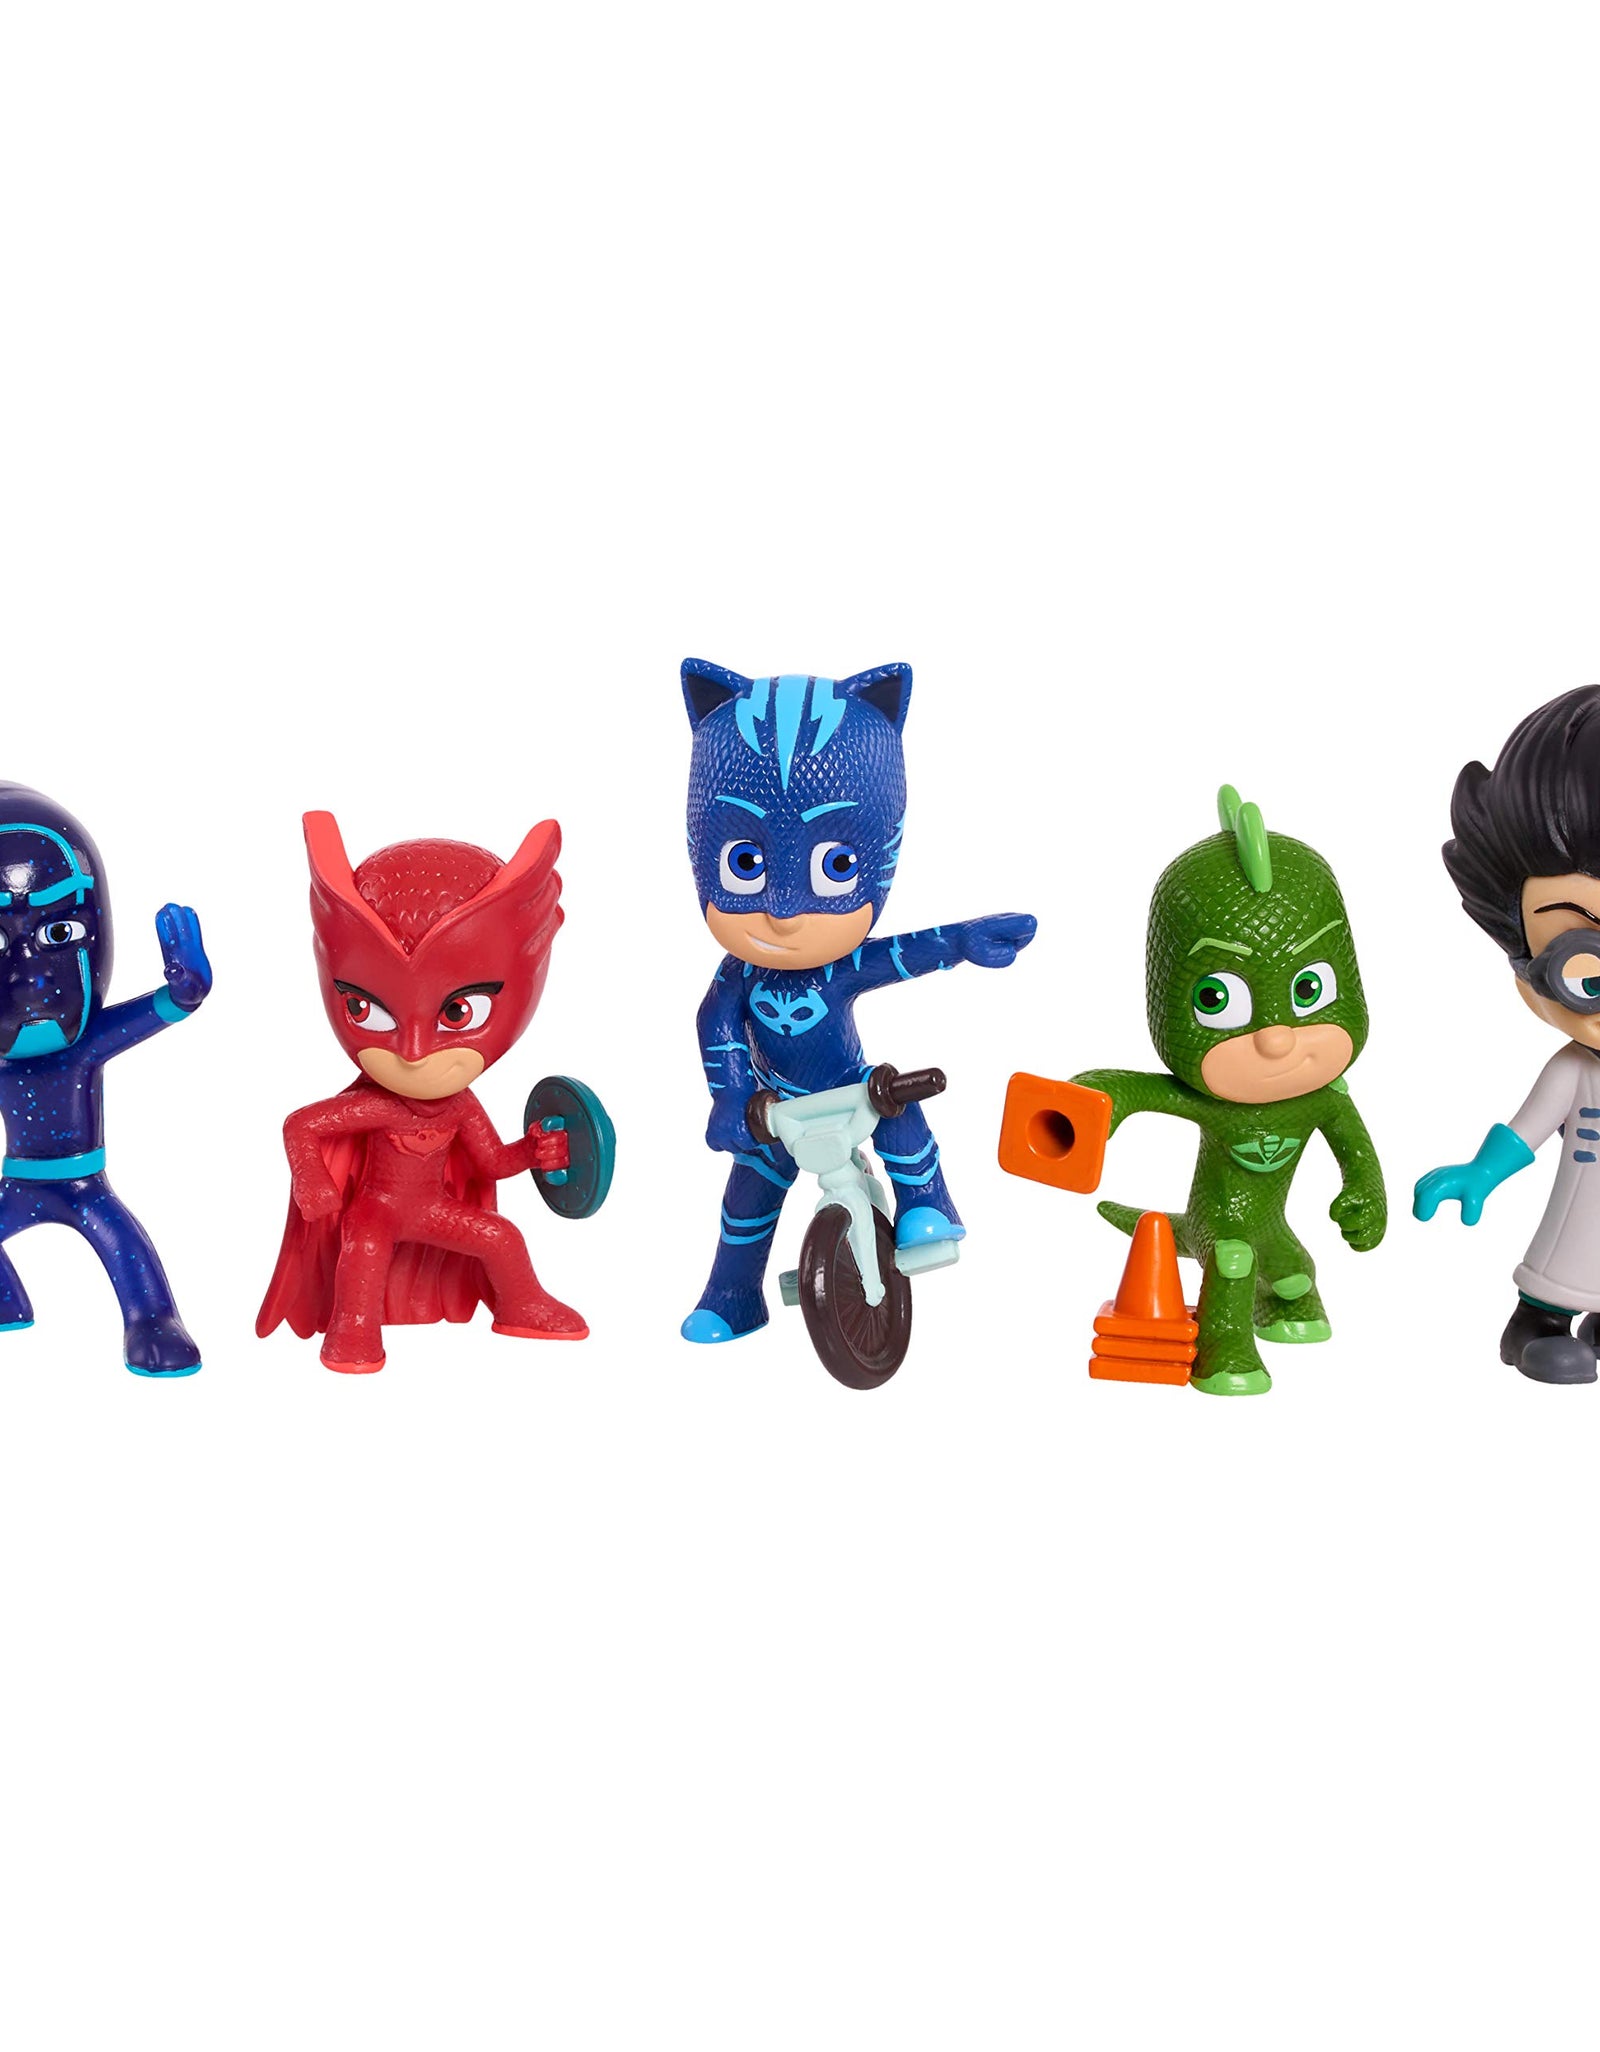 PJ Masks Just Play Collectible 5-Piece Figure Set,Catboy, Owlette, Gekko, Romeo, and Night Ninja